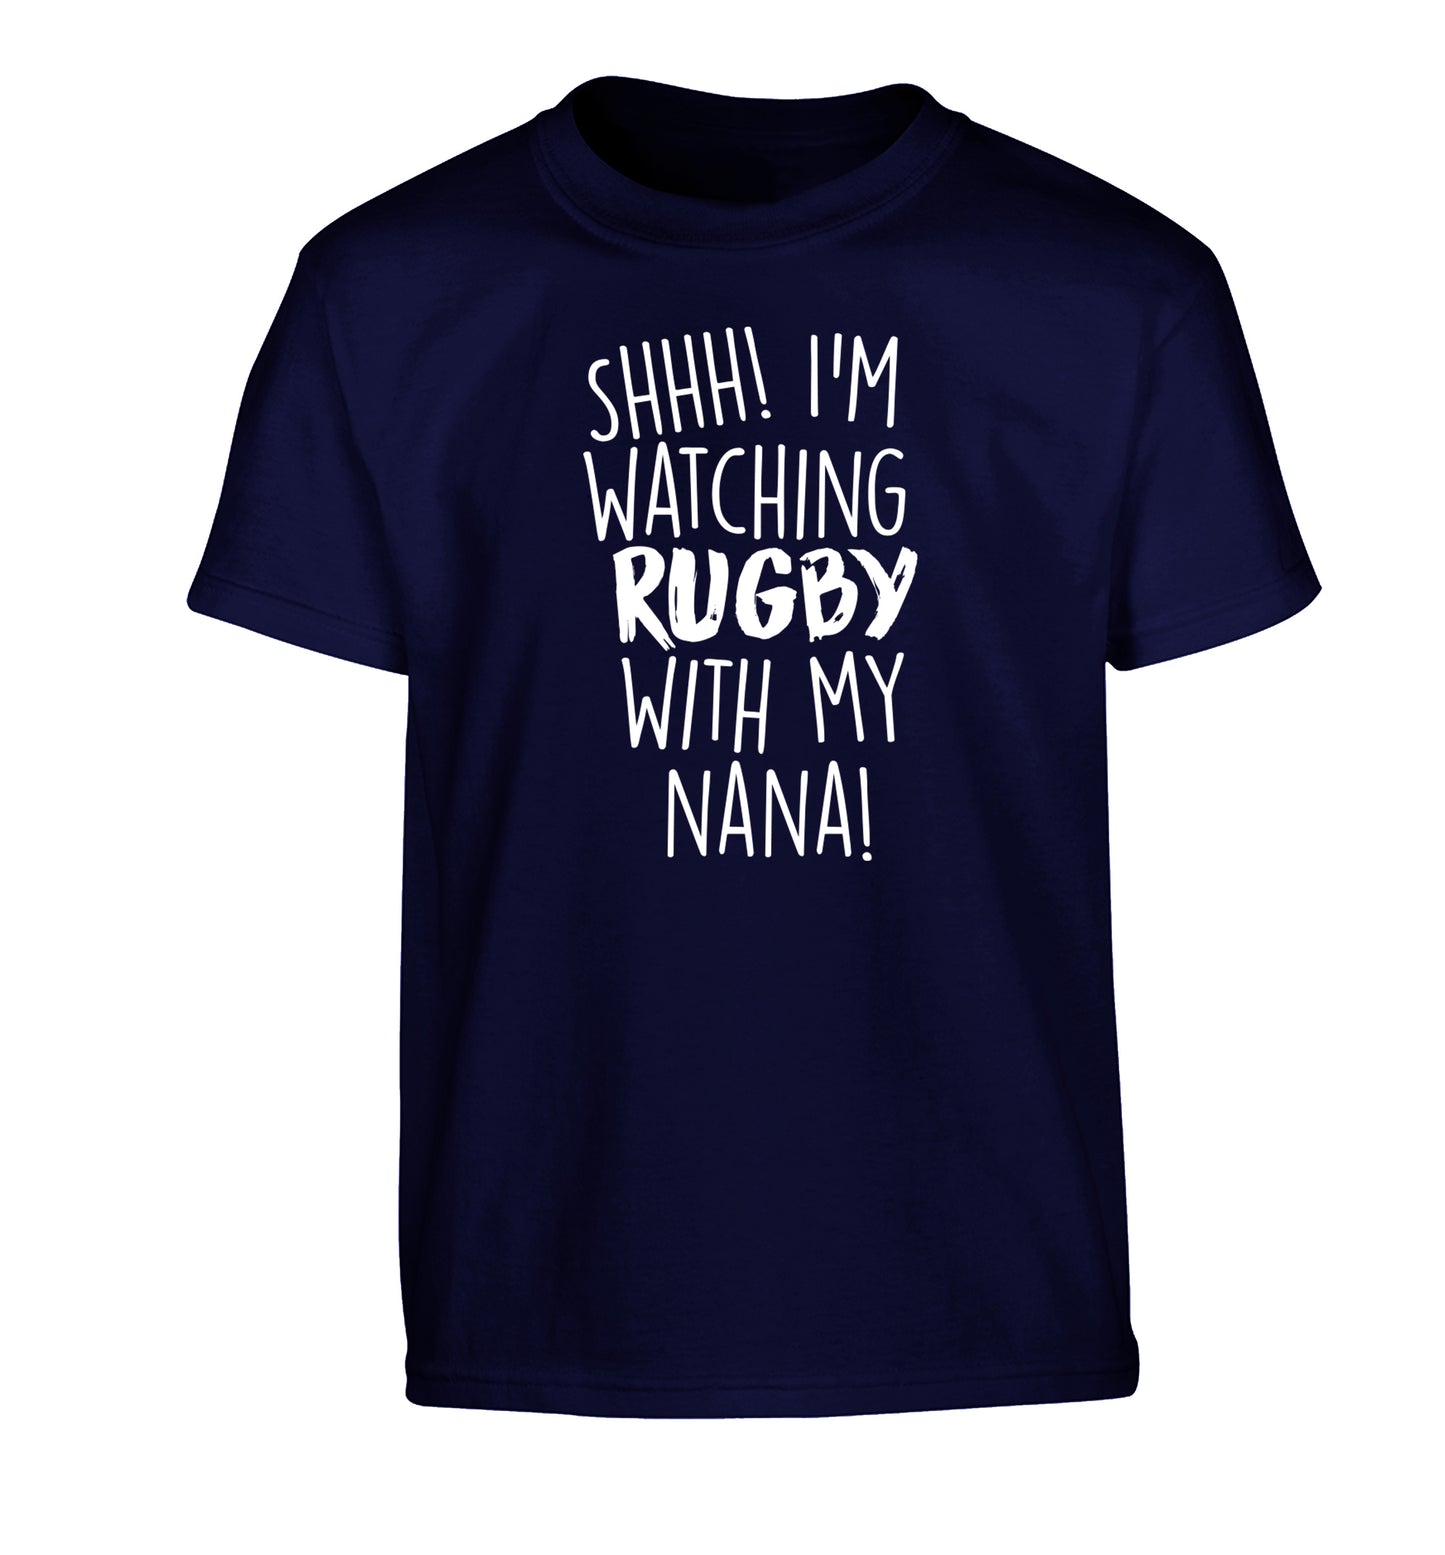 Shh I'm watching rugby with my nana Children's navy Tshirt 12-13 Years